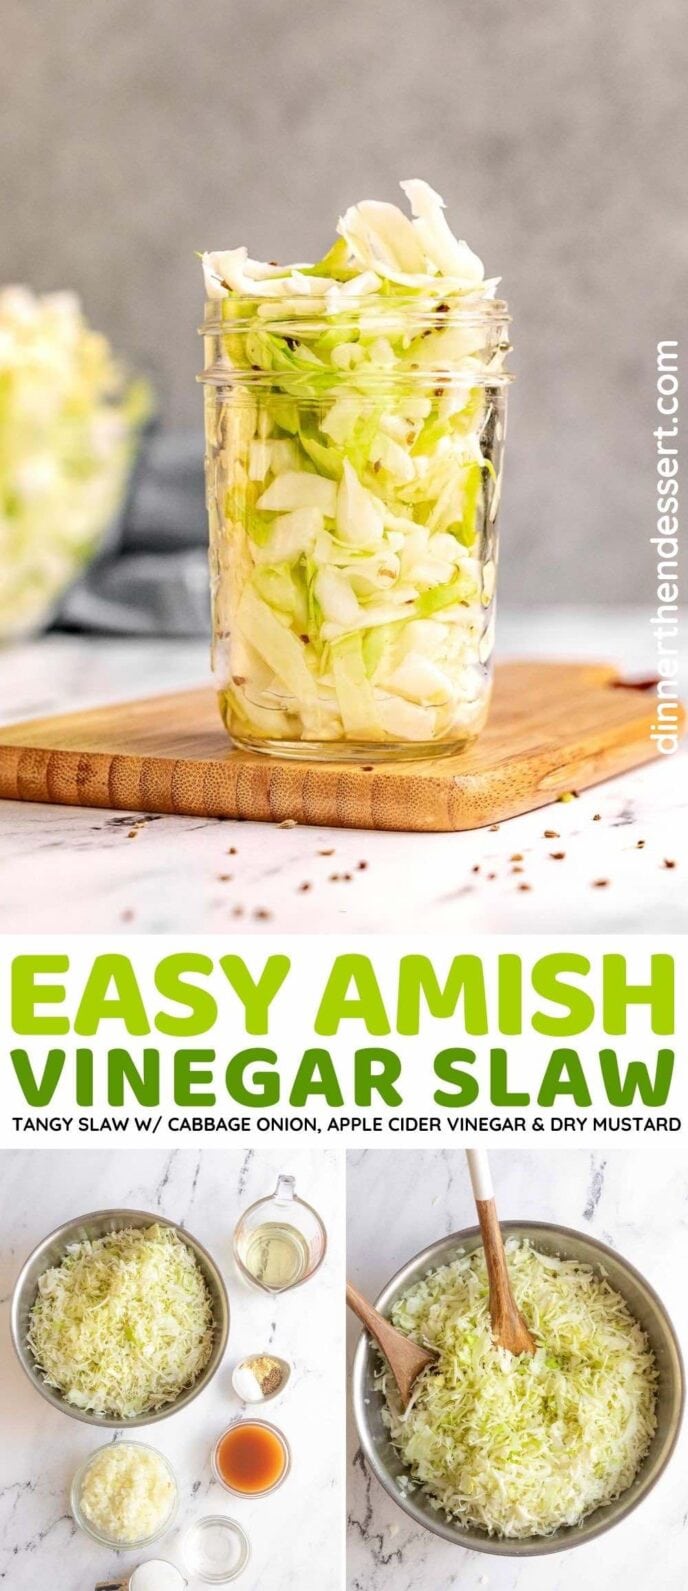 Amish Vinegar Slaw collage